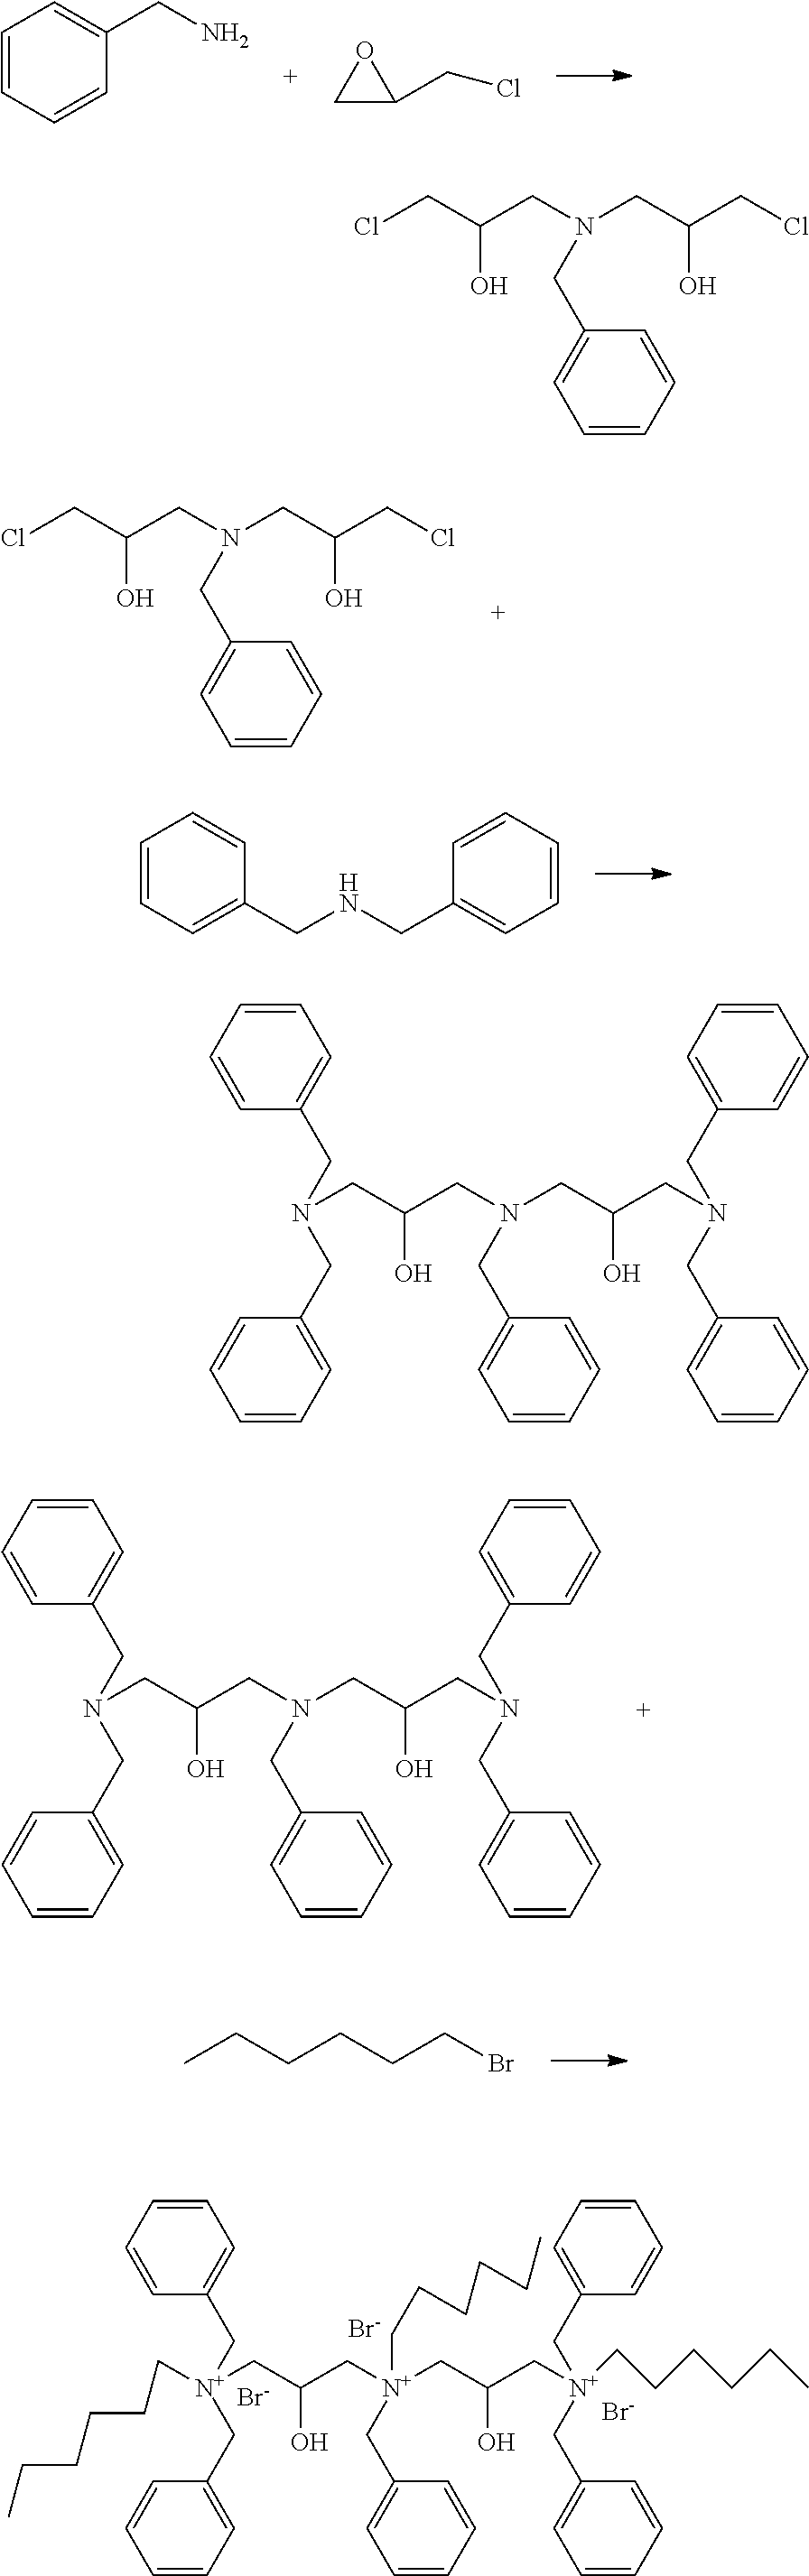 Process for preparing dibenzylamine quaternary ammonium salt high-temperature resistant corrosion inhibitor and applications thereof